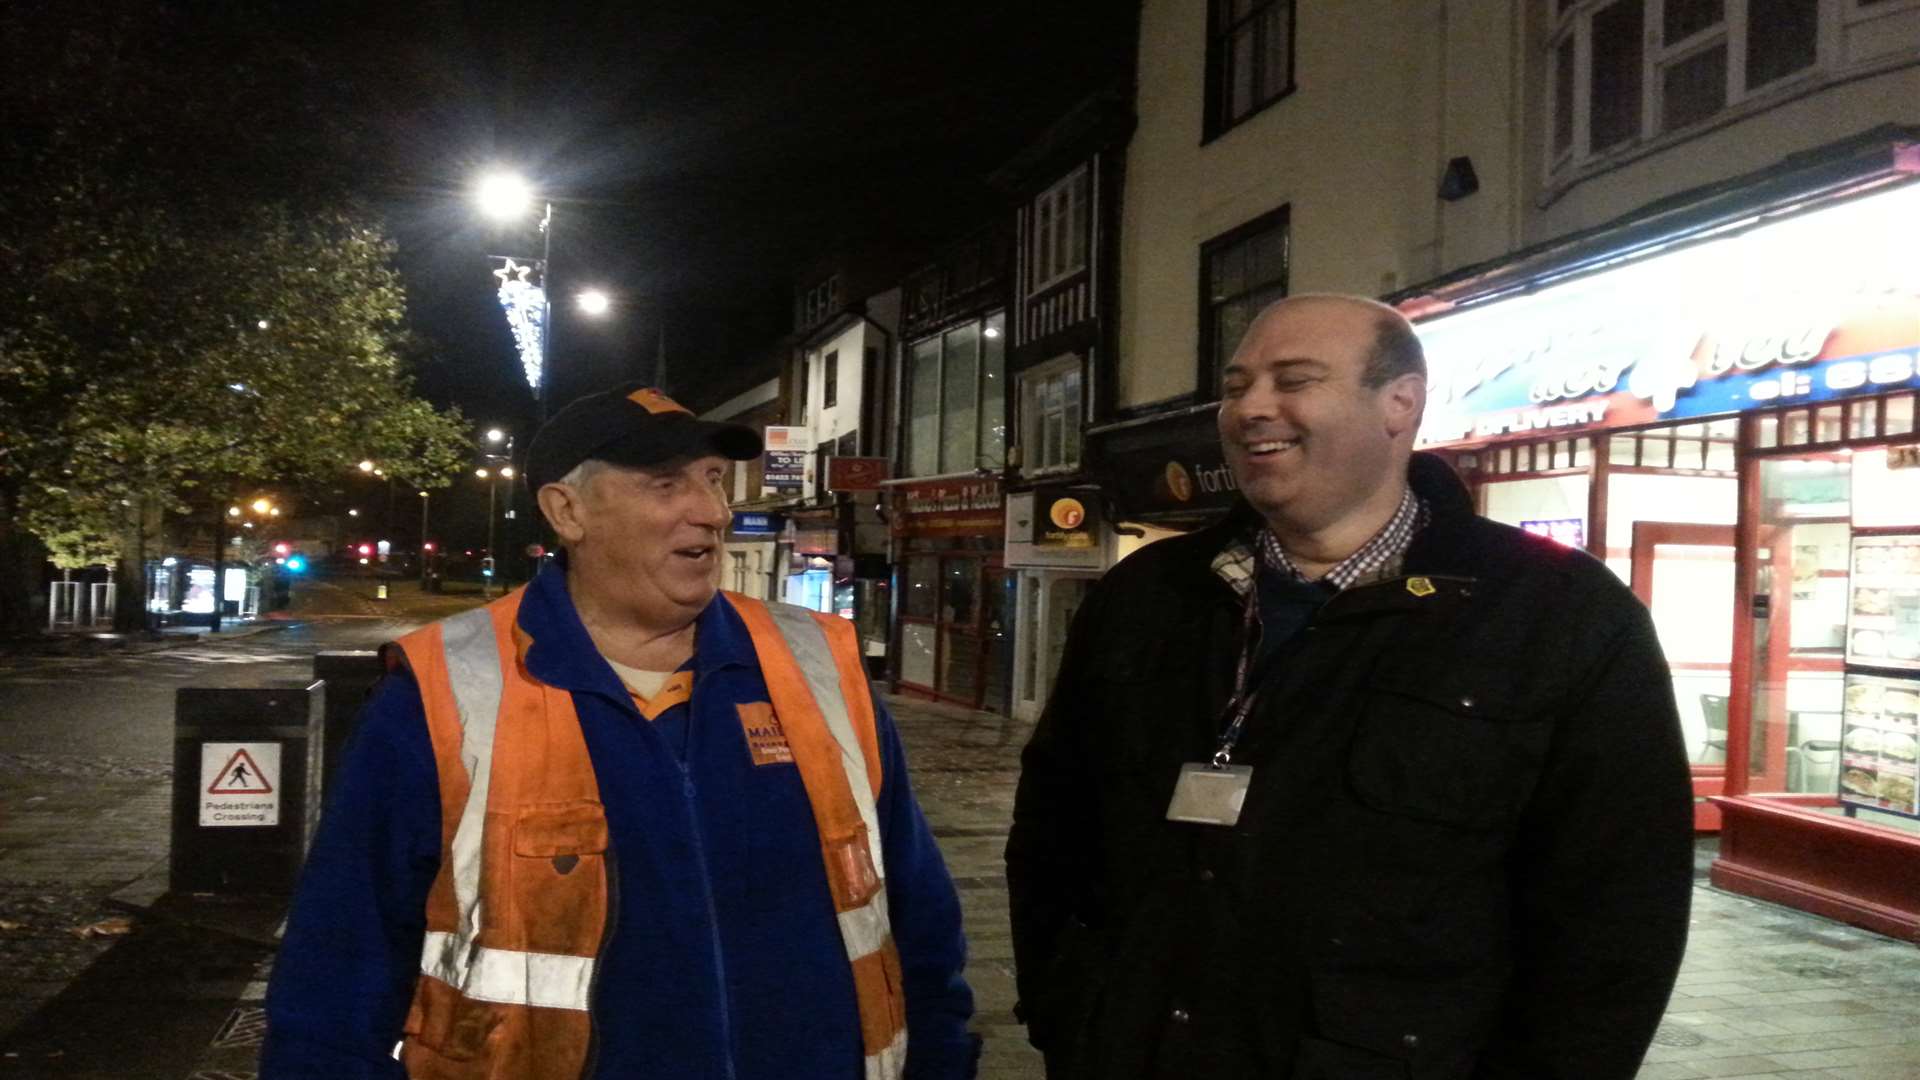 Foreman Steve Smith shares a joke with John Edwards, waste and street scene officer